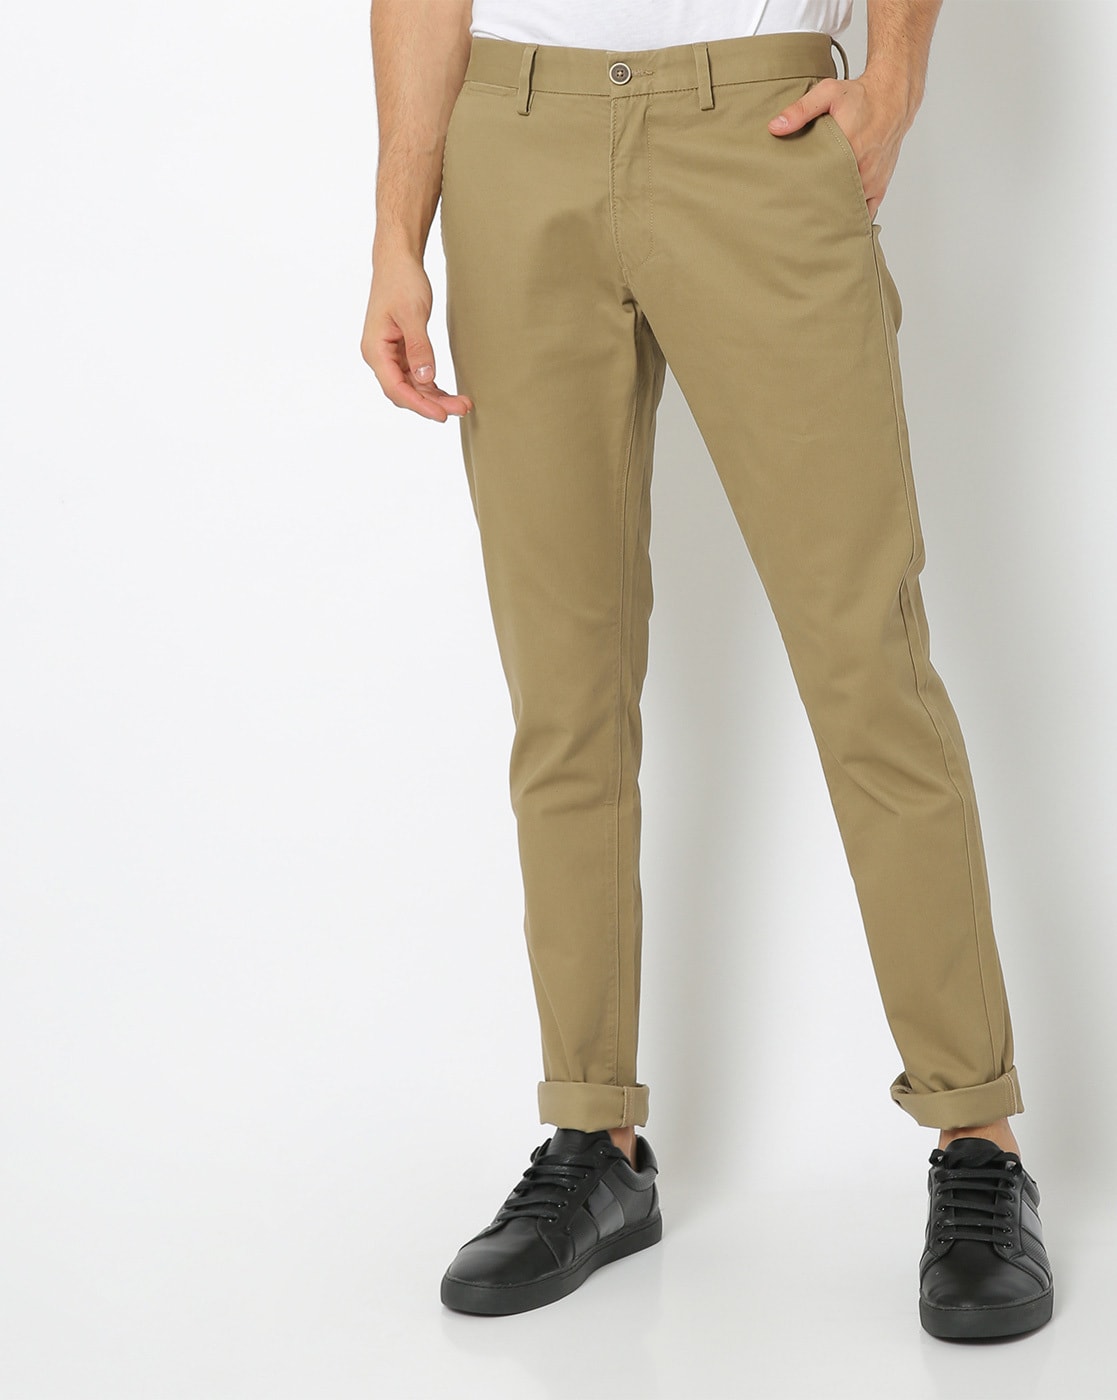 Buy US POLO ASSN Men Slim Fit Cotton Trousers USTR6501Stone28W x  34LStone Grey28 at Amazonin